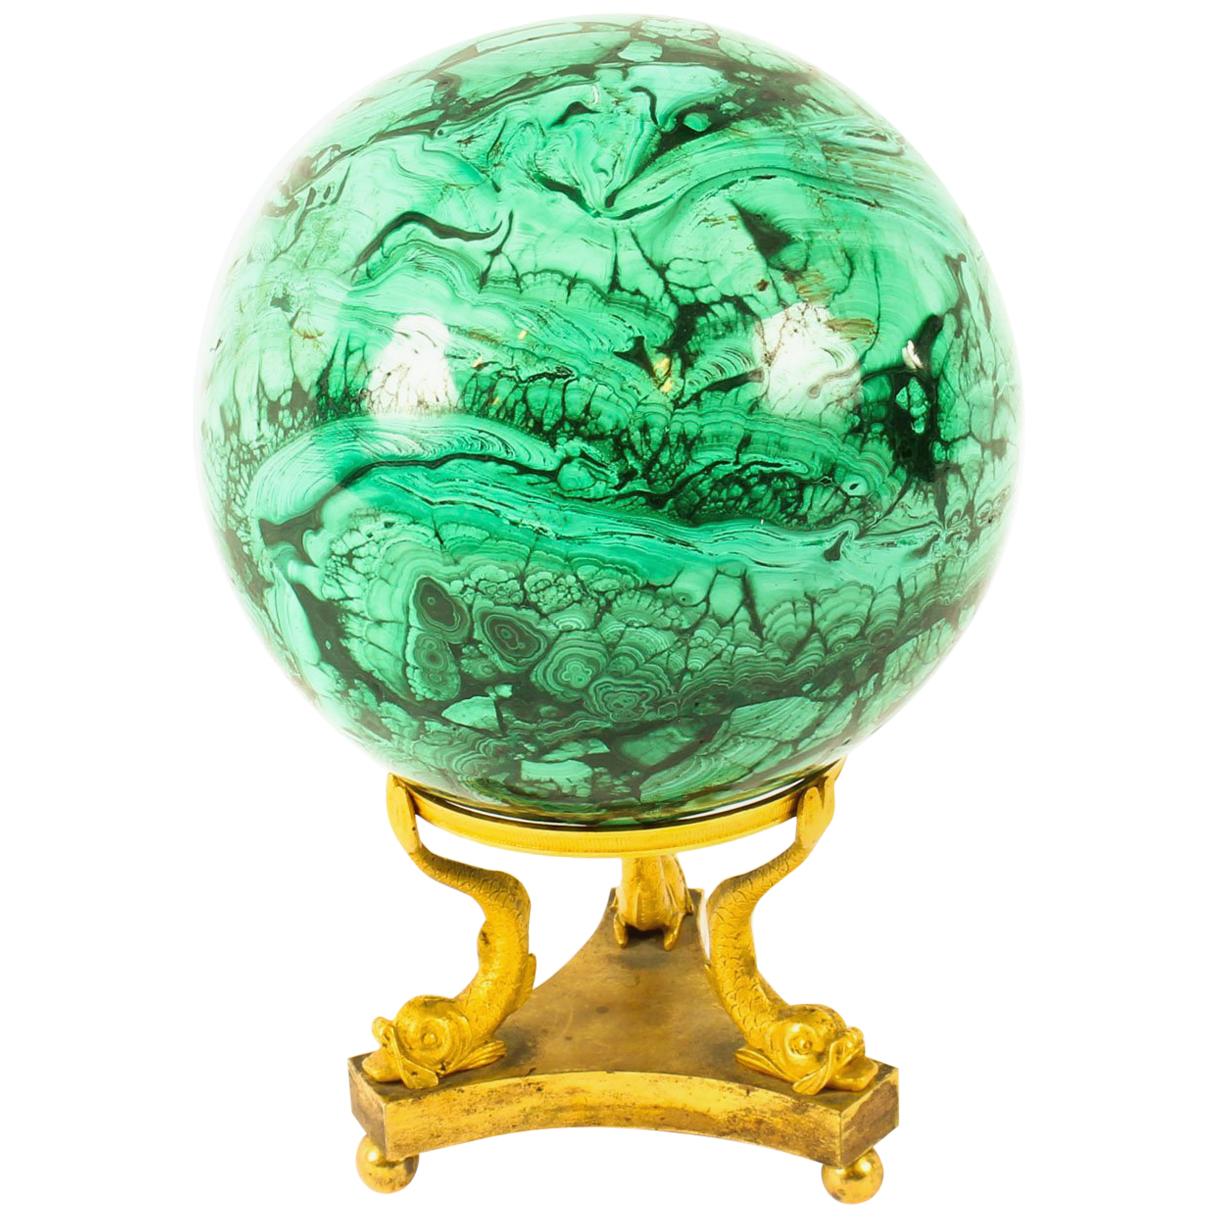 Antique Large Polished Malachite and Ormolu Sphere, 19th Century